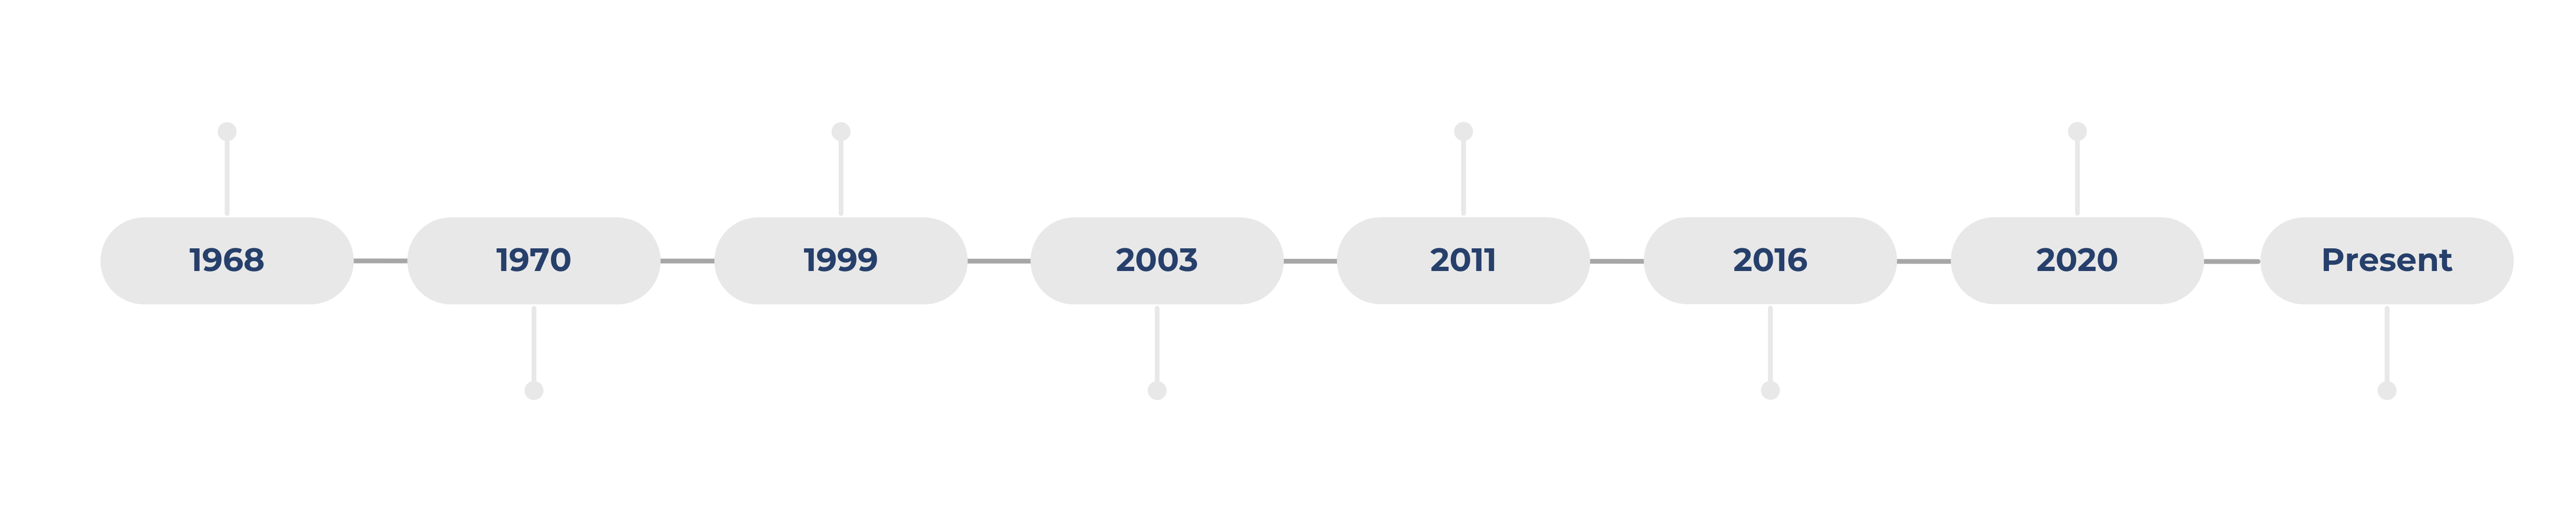 MCS History Timeline